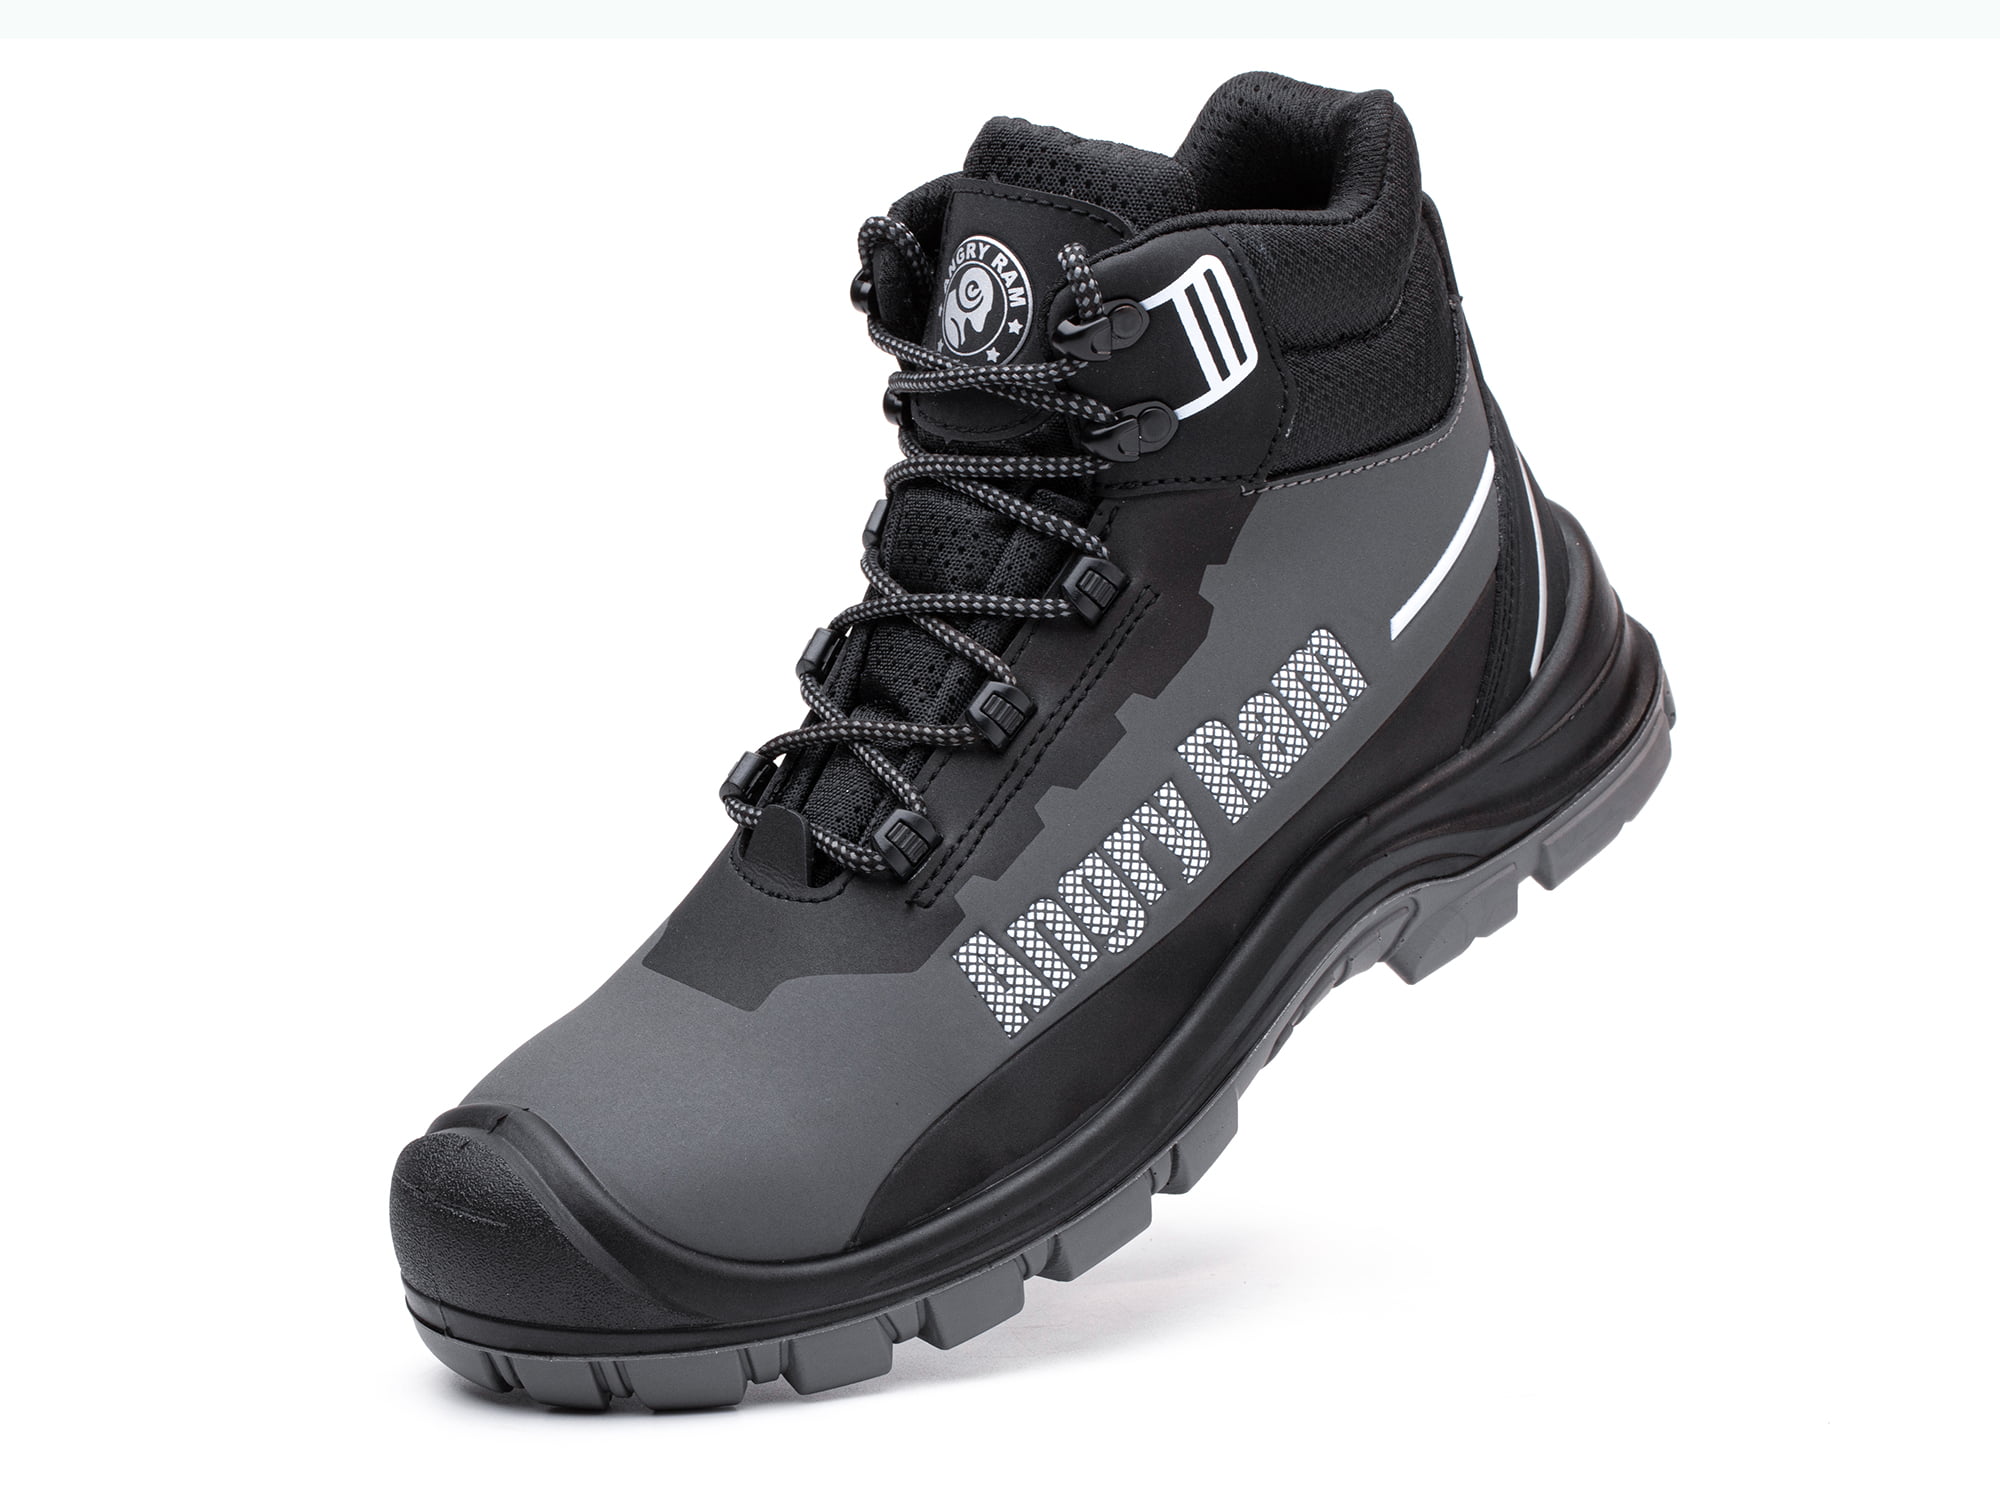 ANGRYRAM Steel Toe Boots for Men Women Waterproof Work Boots Indestructible Construction Puncture Proof Lightweight Slip Resistant Working Shoes 